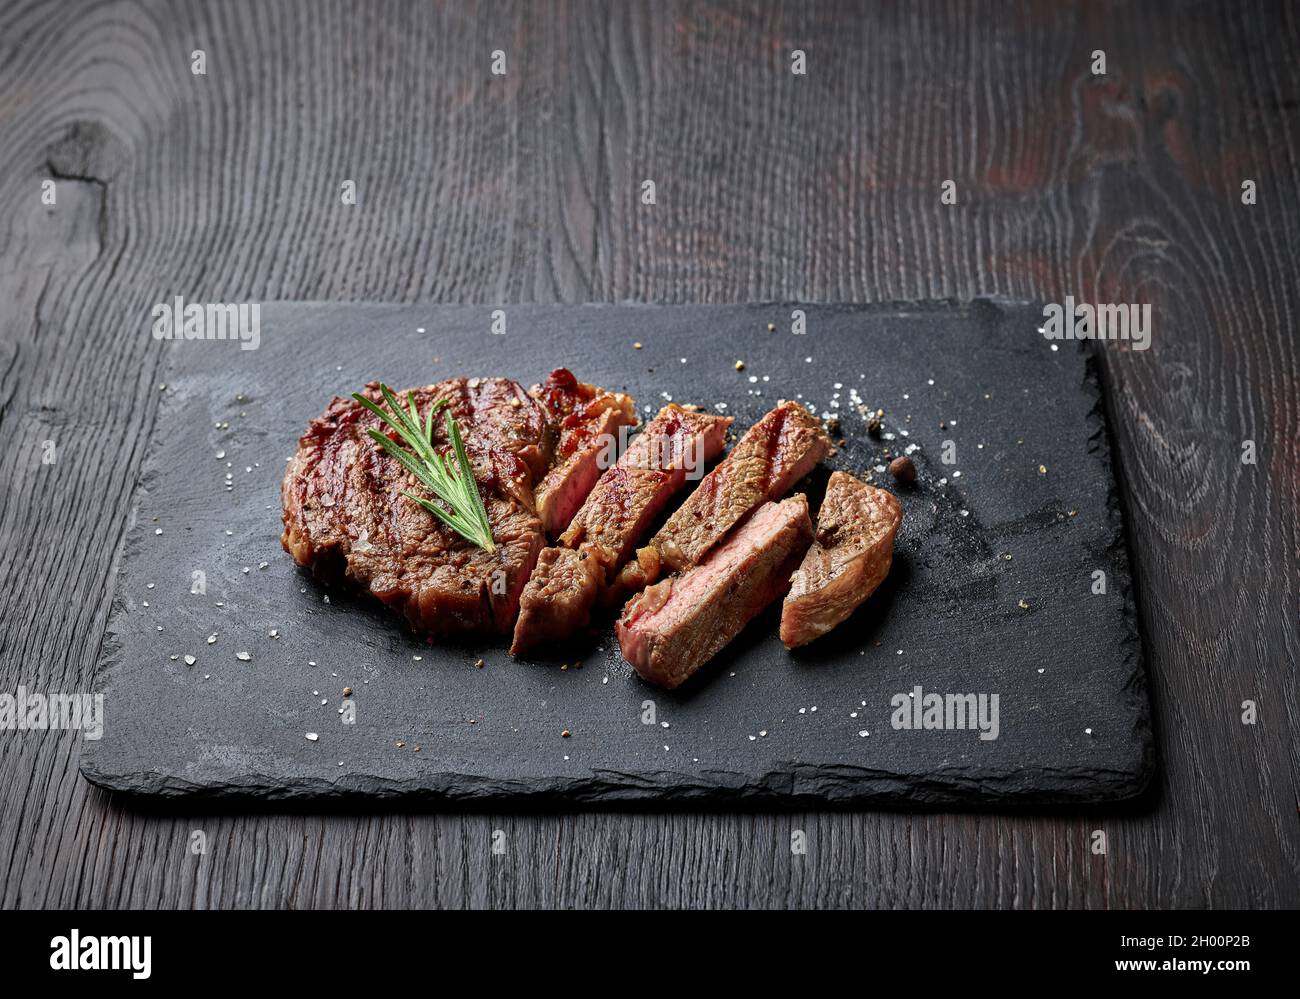 Sliced grilled entrecote steak on black stone board Stock Photo - Alamy